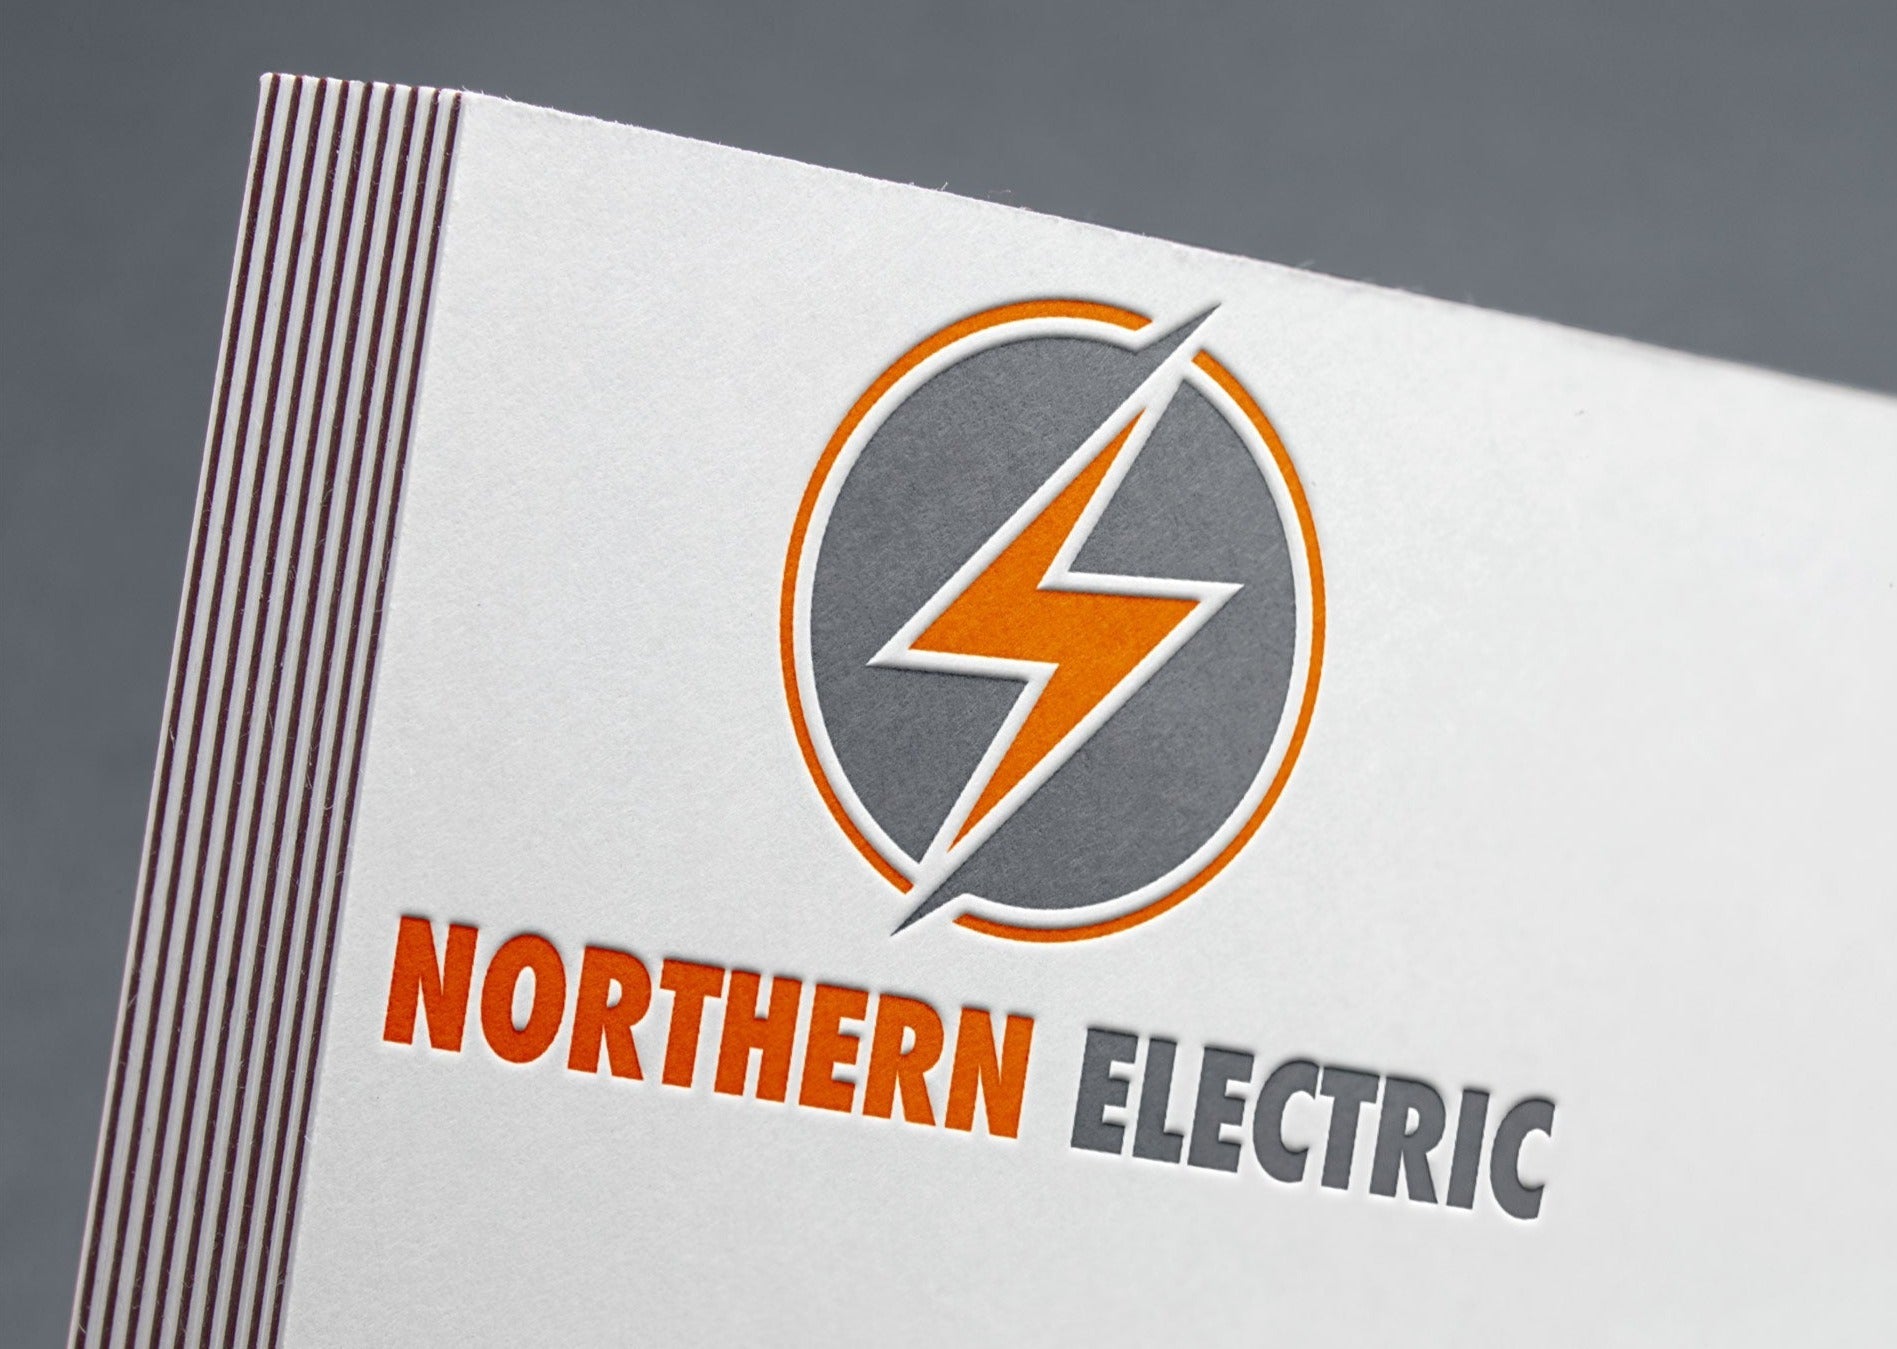 electrical company logo design